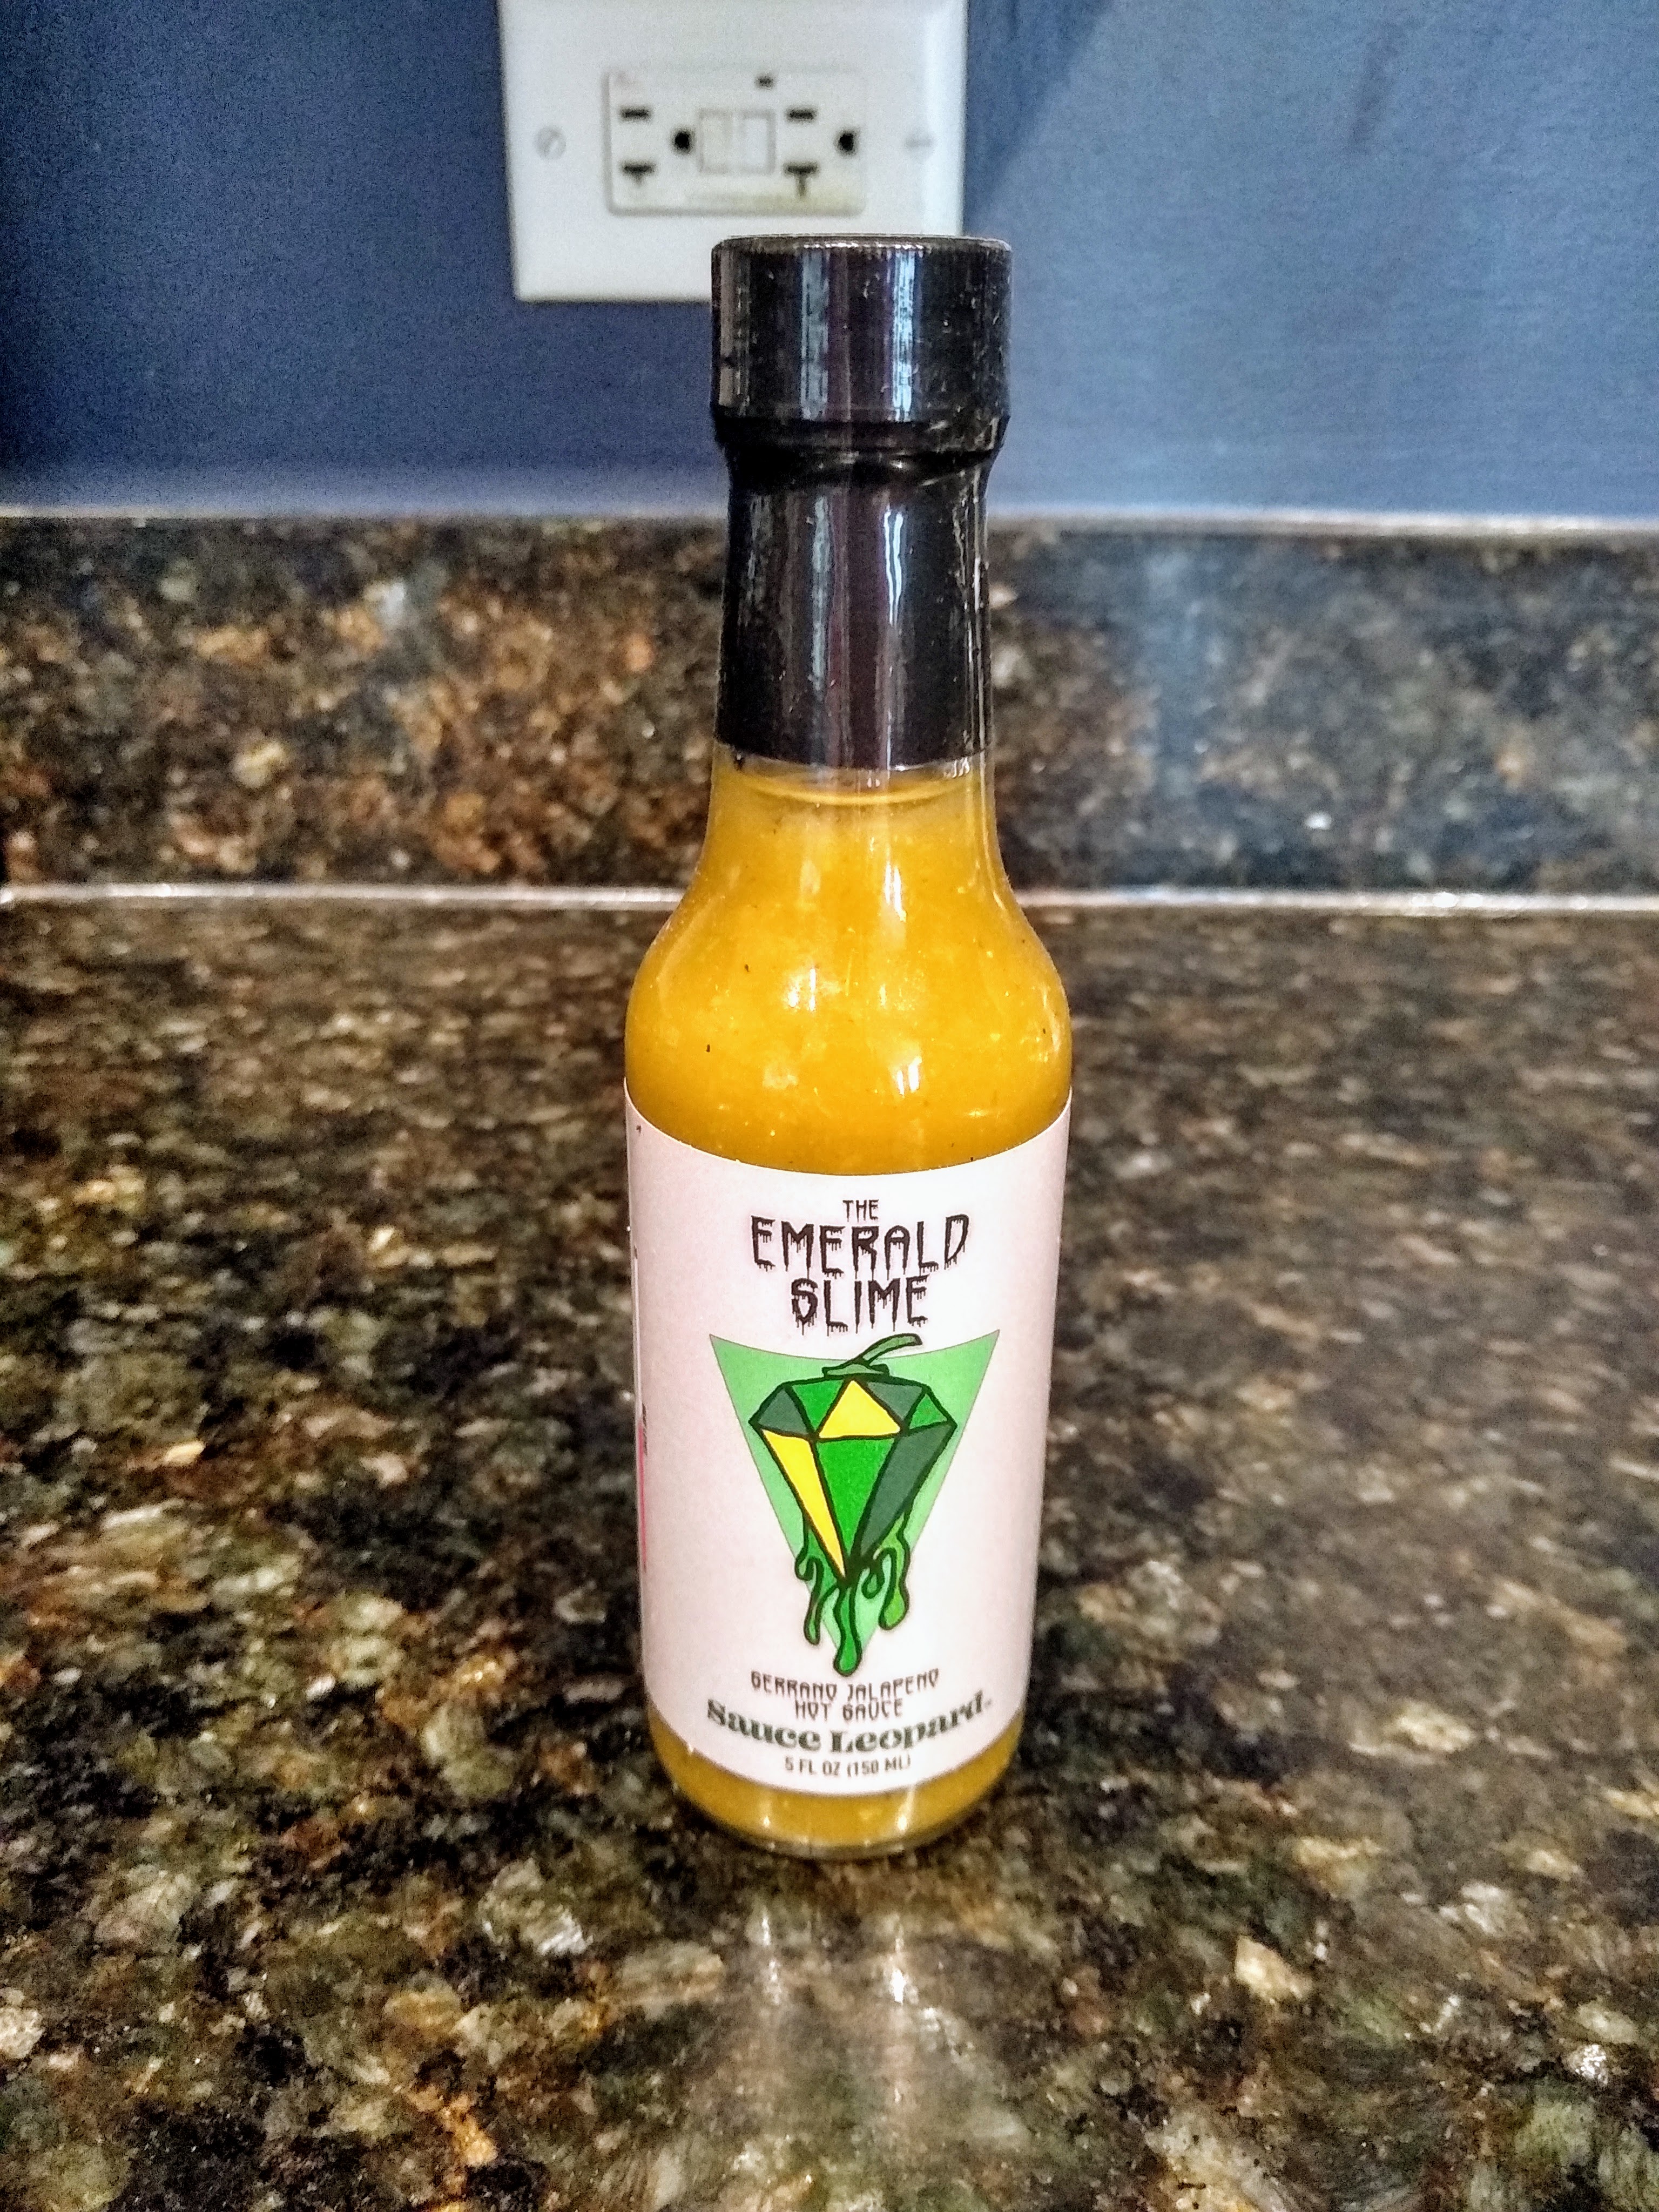 The Emerald Slime Serrano Hot Sauce